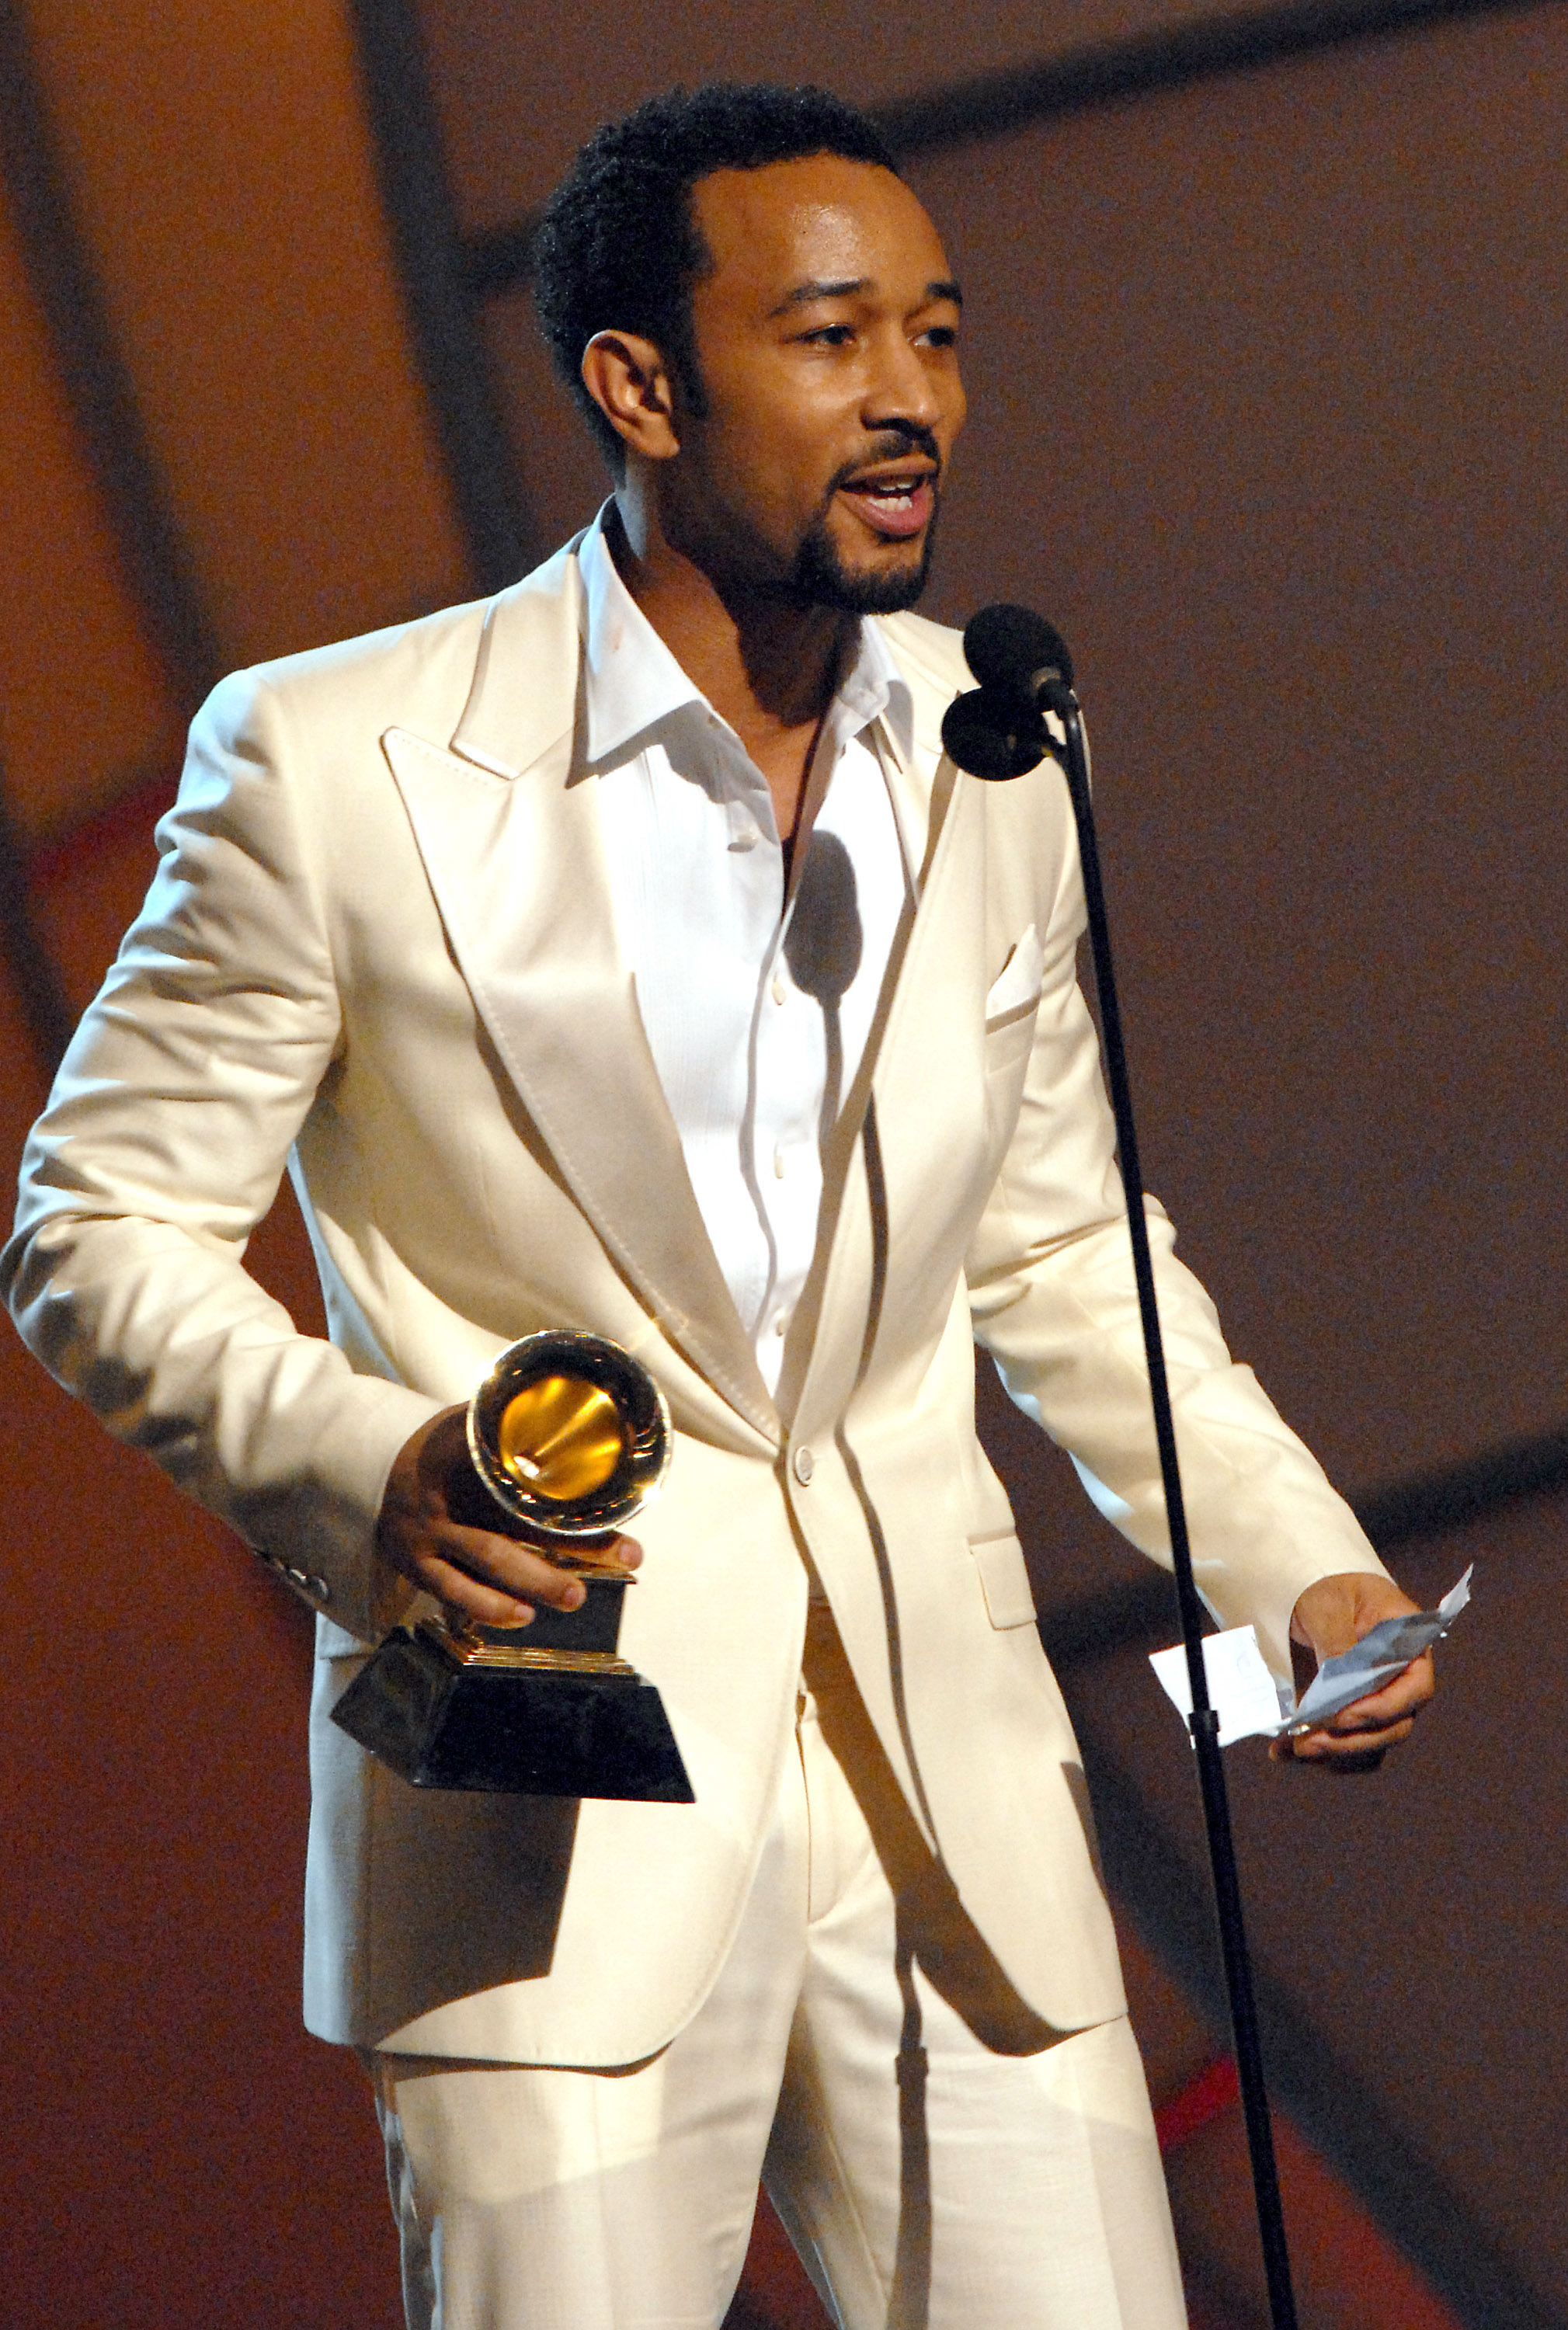 John Legend accepting his Grammy